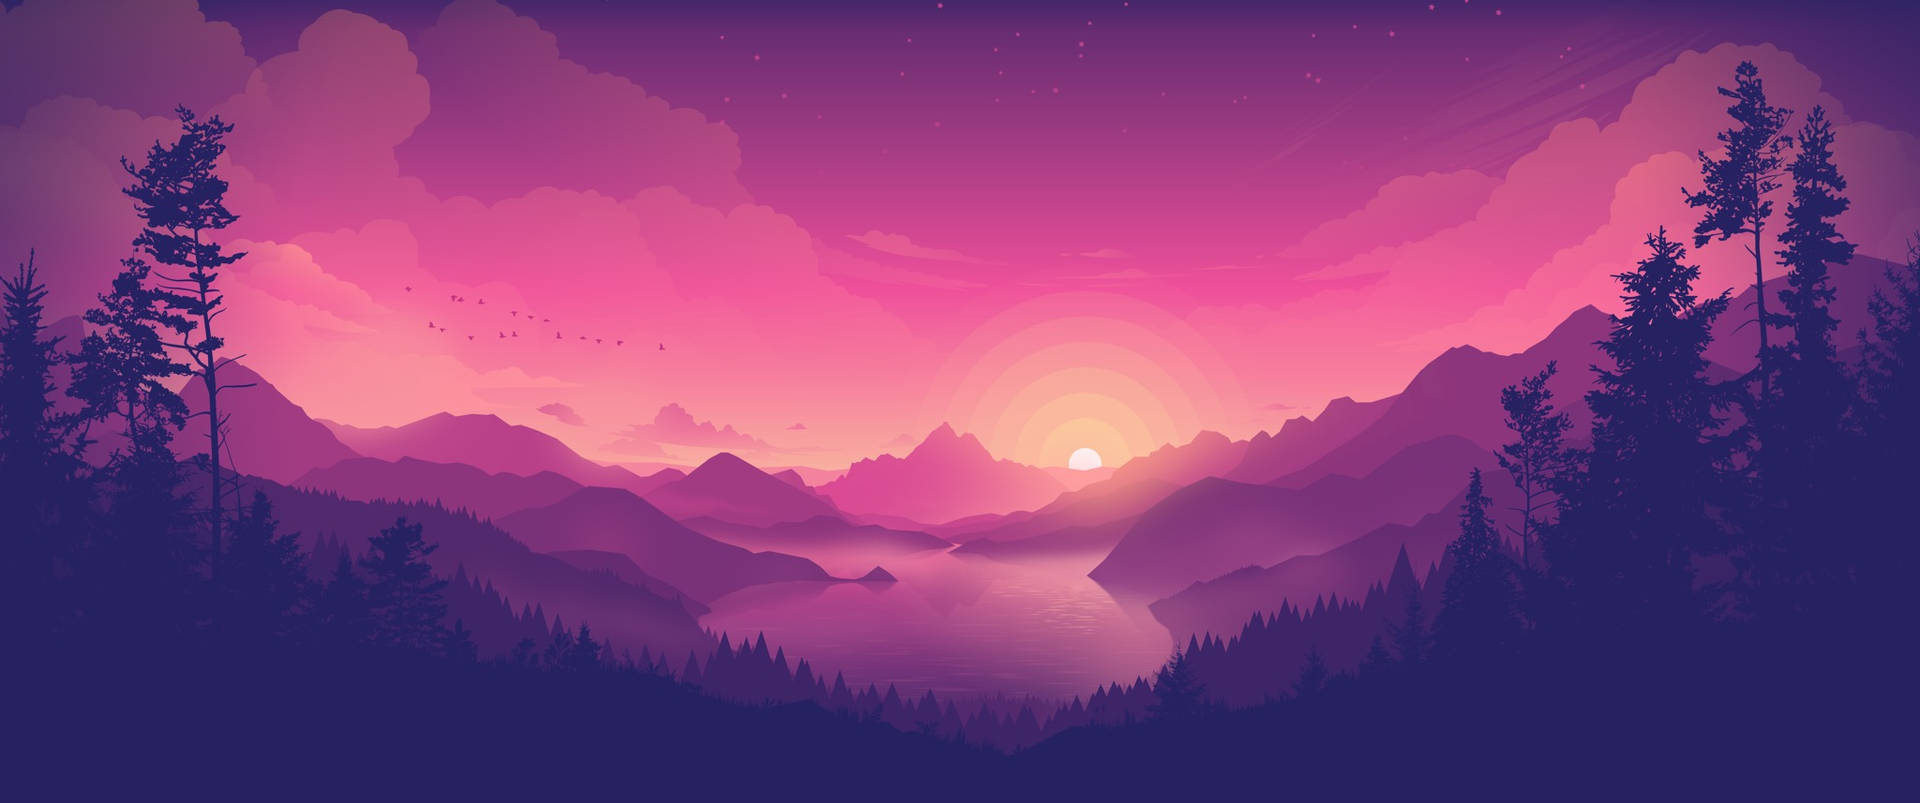 Pink Sunset Sky Digital Art Background